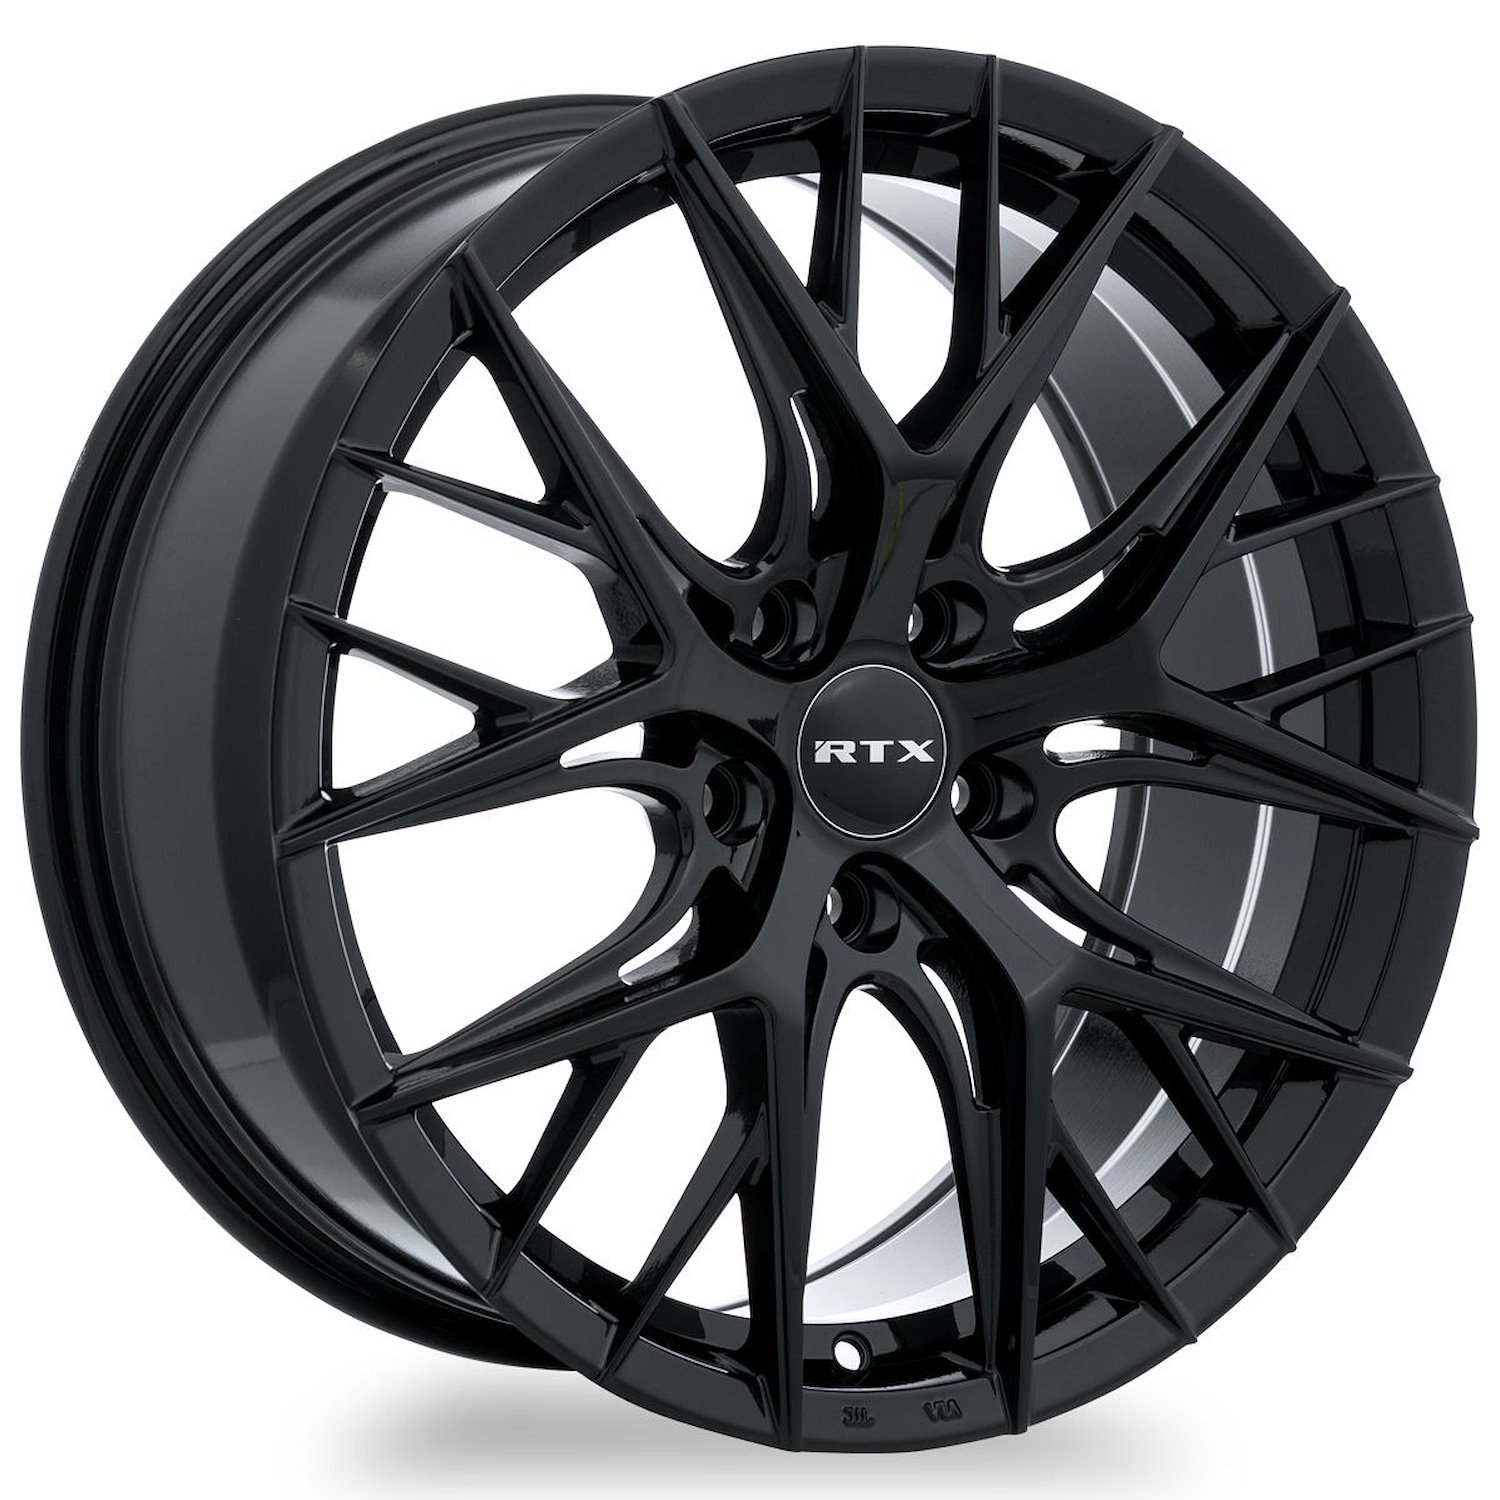 083038 RTX-Series Valkyrie Wheel [Size: 17" x 7.50"] Gloss Black Finish